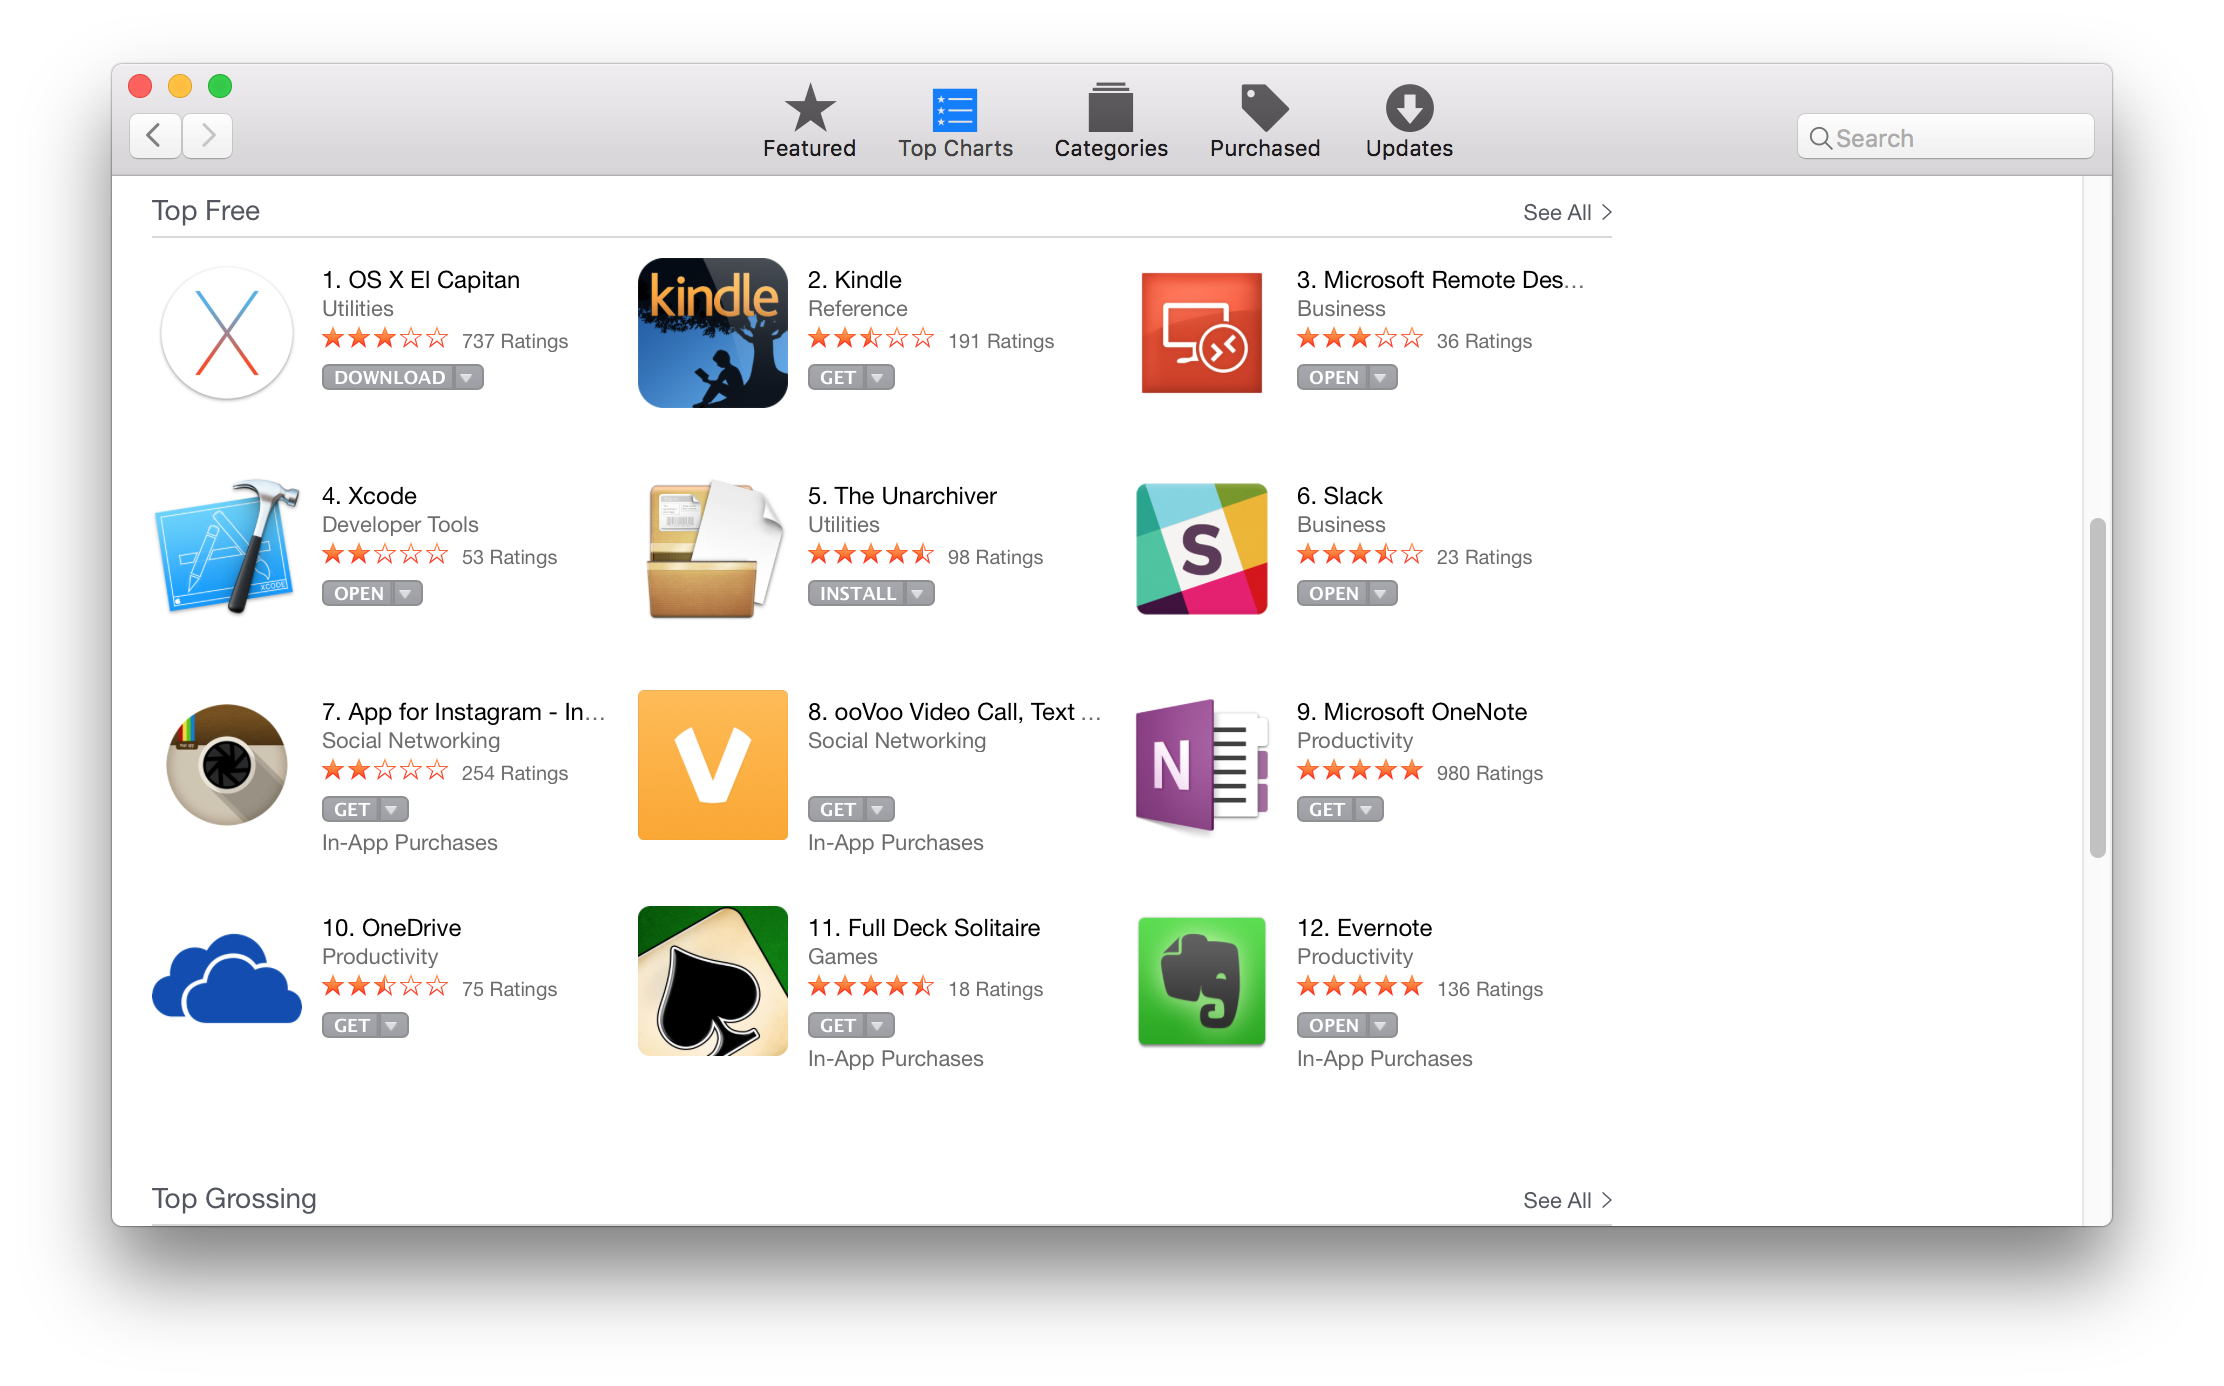 Apple's App Store - Top Free